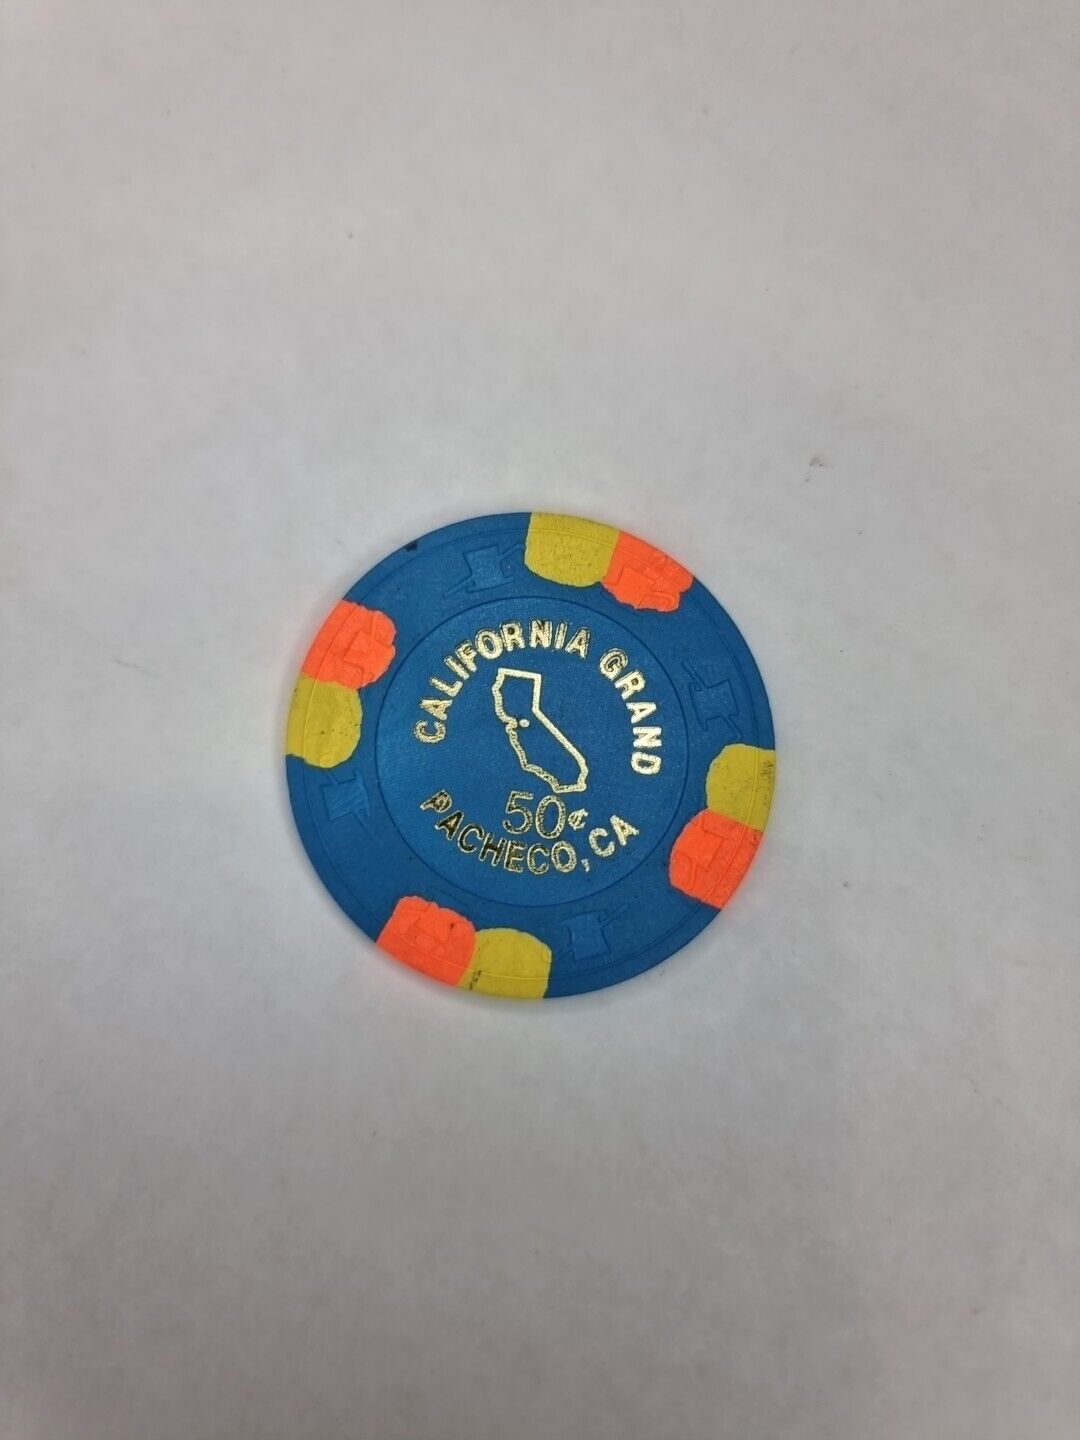 California Grand Pacheco Poker Chip, Rare Casino 50 cent Chip B1246